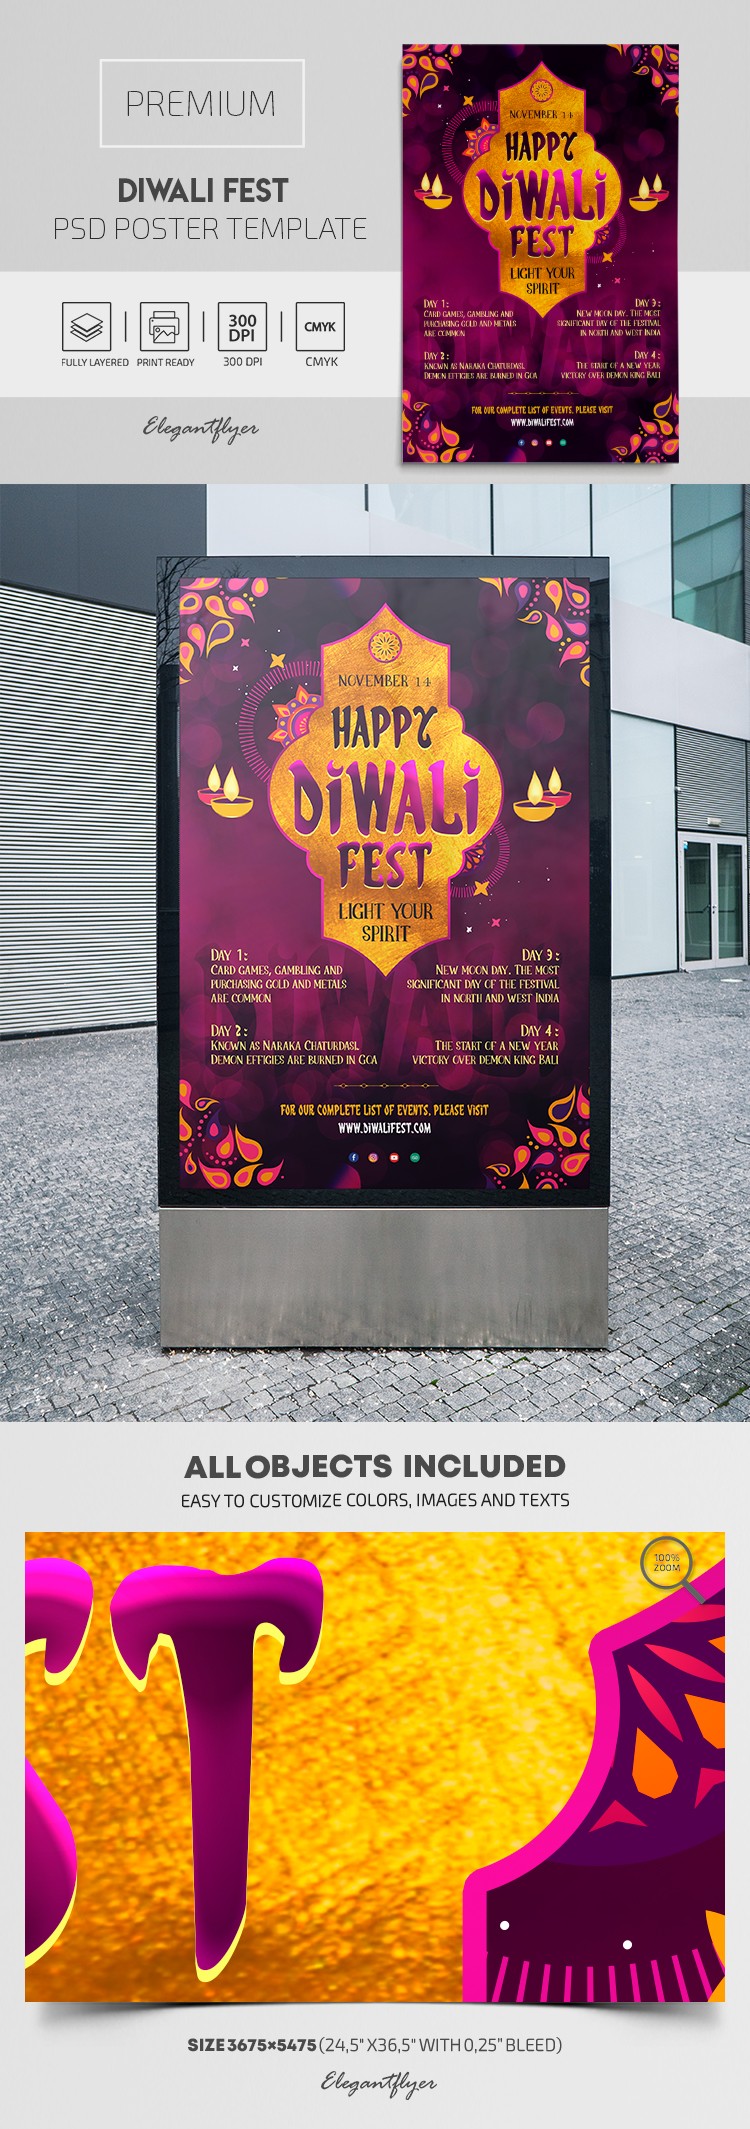 Diwali Fest Poster by ElegantFlyer